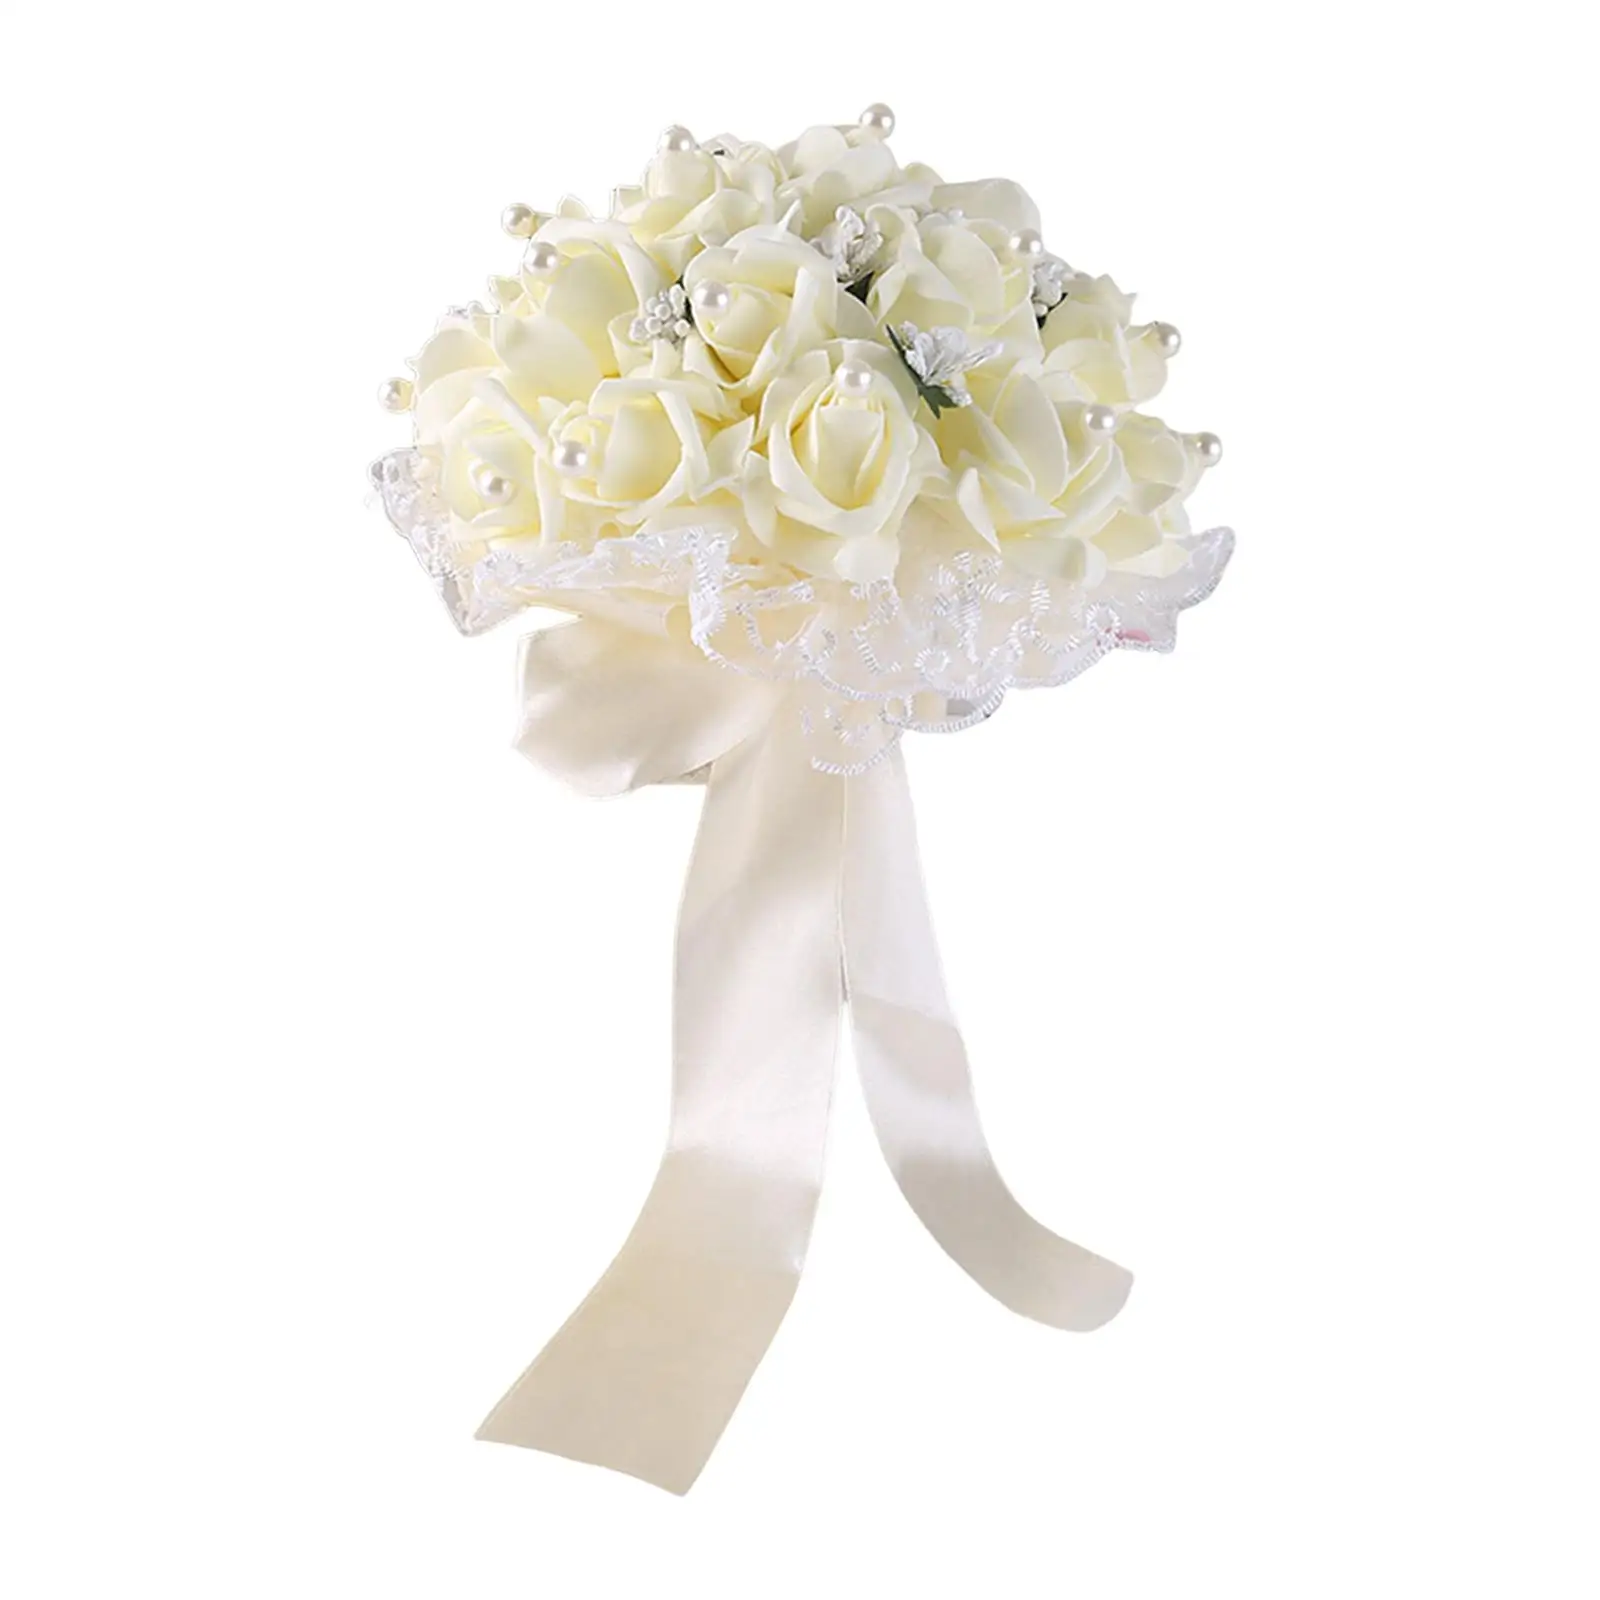 Wedding Bouquets Handmade Decorative with Silk Ribbon Bridal Wedding Throw Bouquet for Photo Prop Wedding Holiday Decor